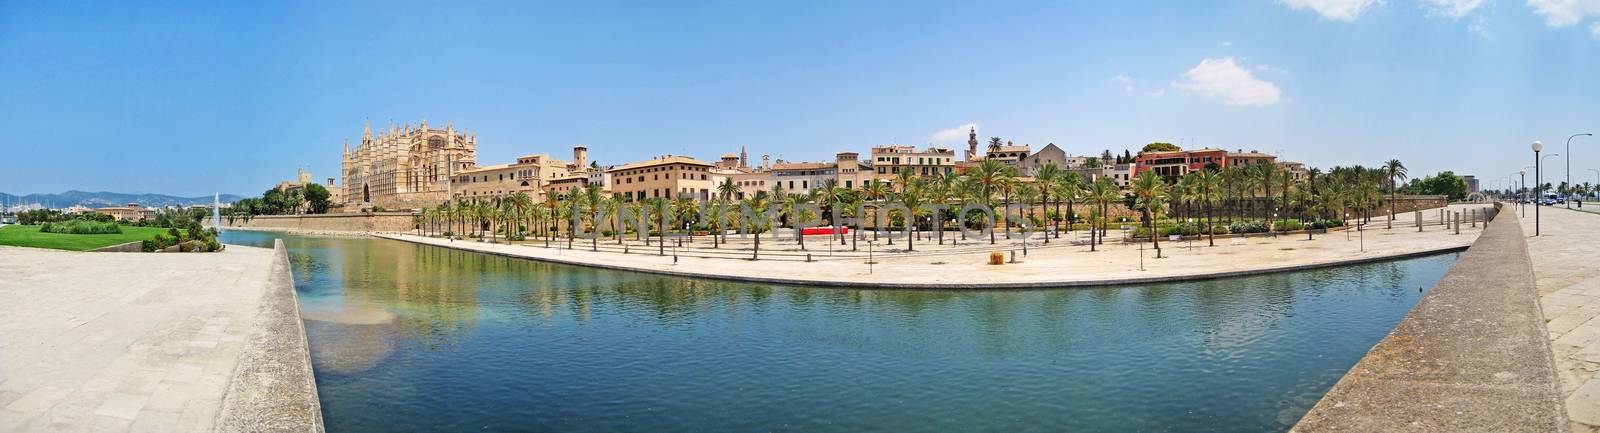 Cathedral La Seu, Palma de Majorca - panorama view from Parc de la Mar, lake in front